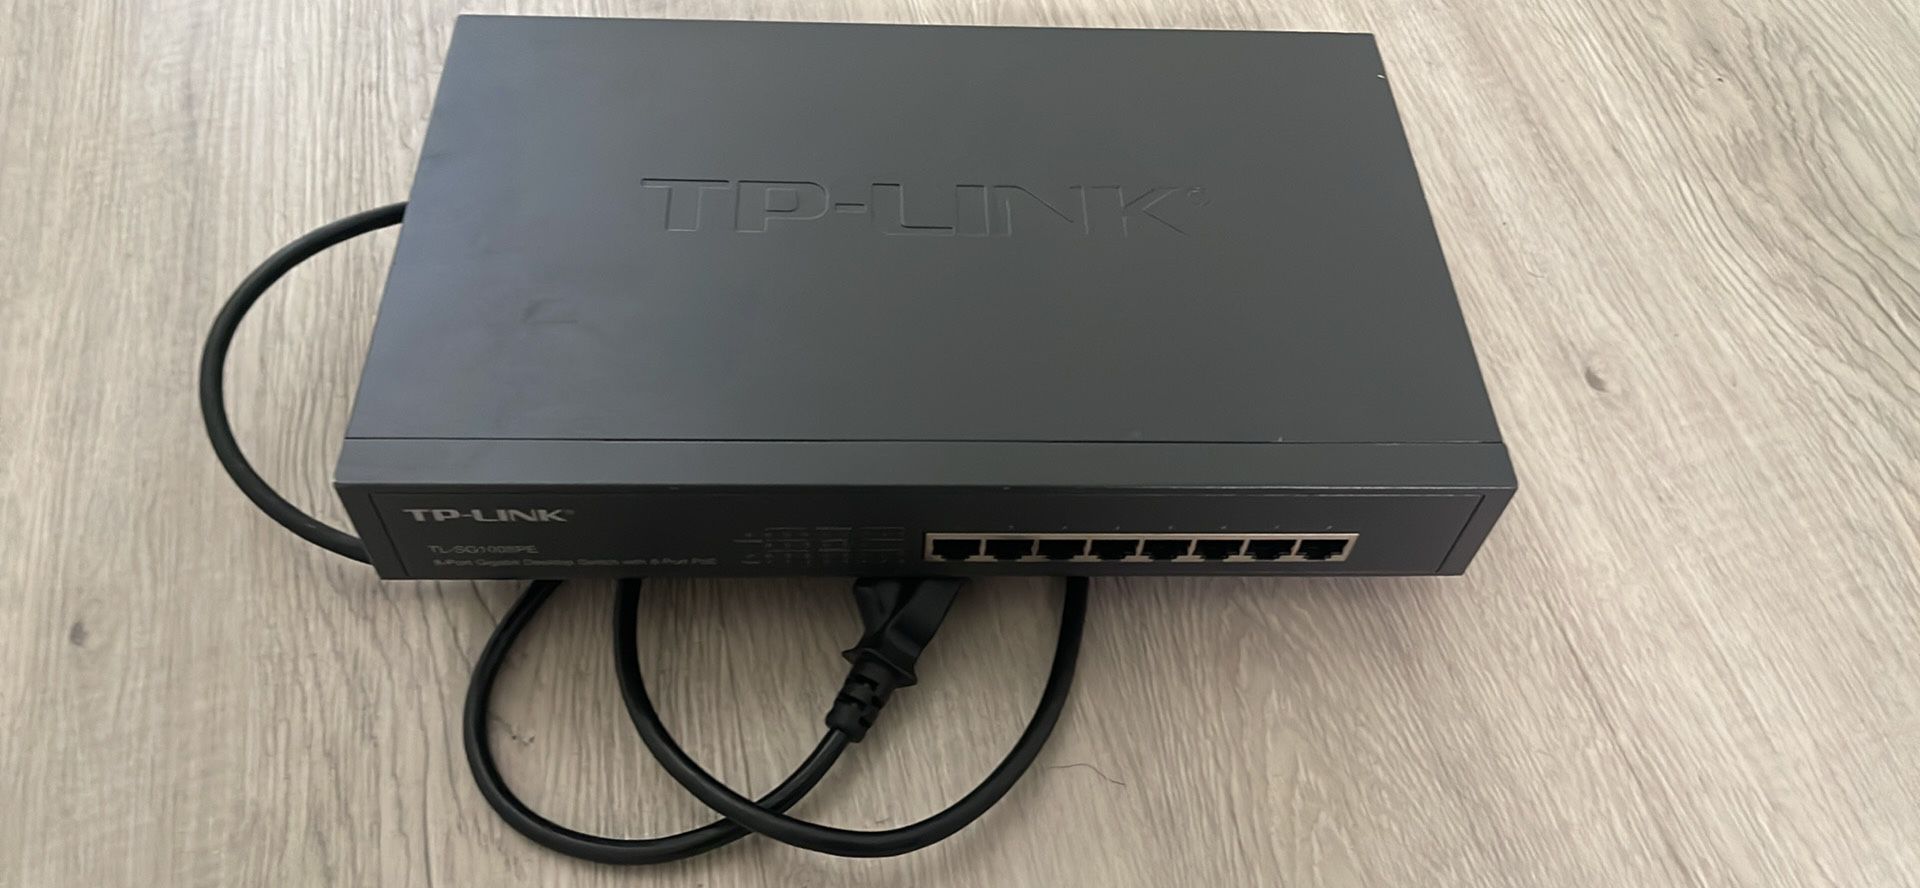 TP-Link 8-Port Gigabit Desktop/Rackmount Switch with 8-Port PoE+ (TL-SG1008PE)